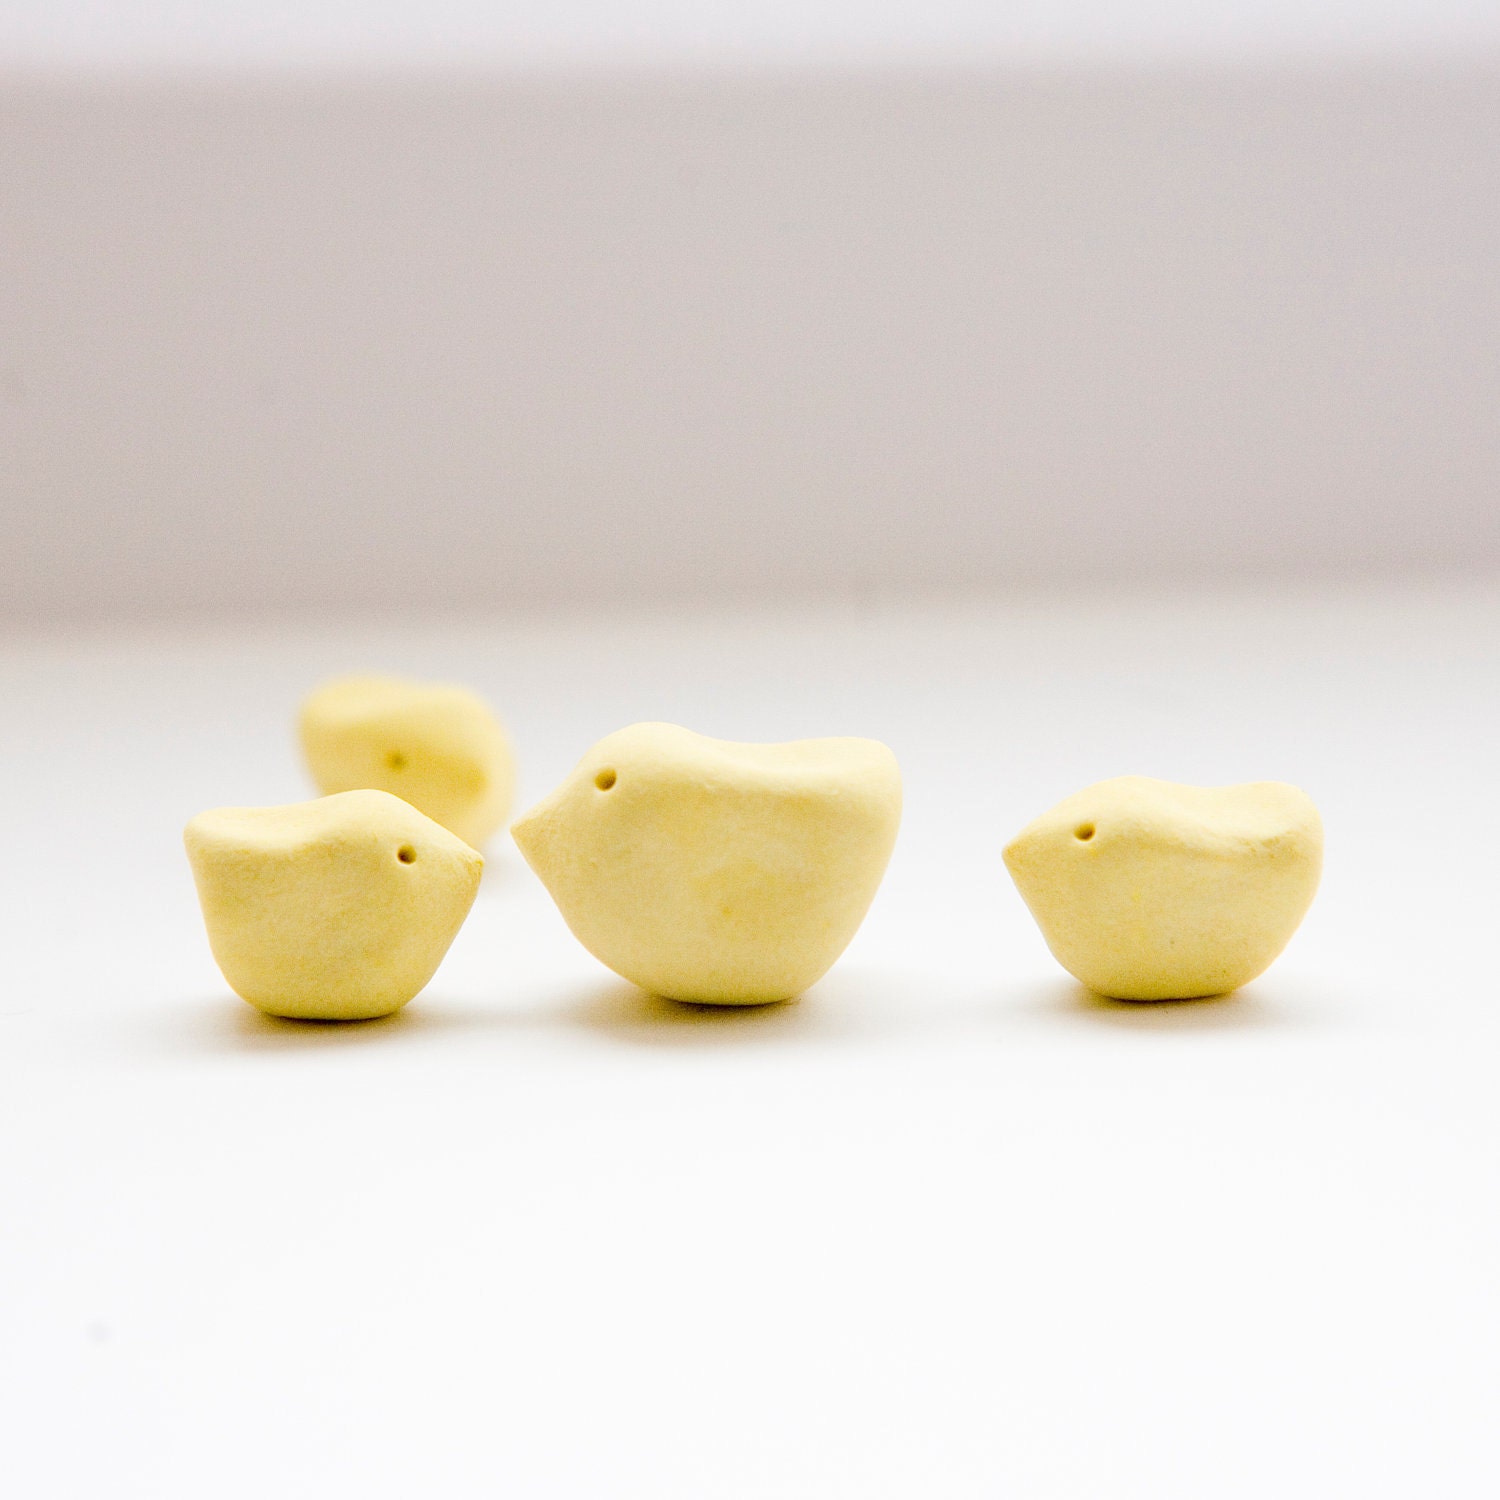 Yellow Easter chicks tiny little miniature bird sculpture family four ceramic birds